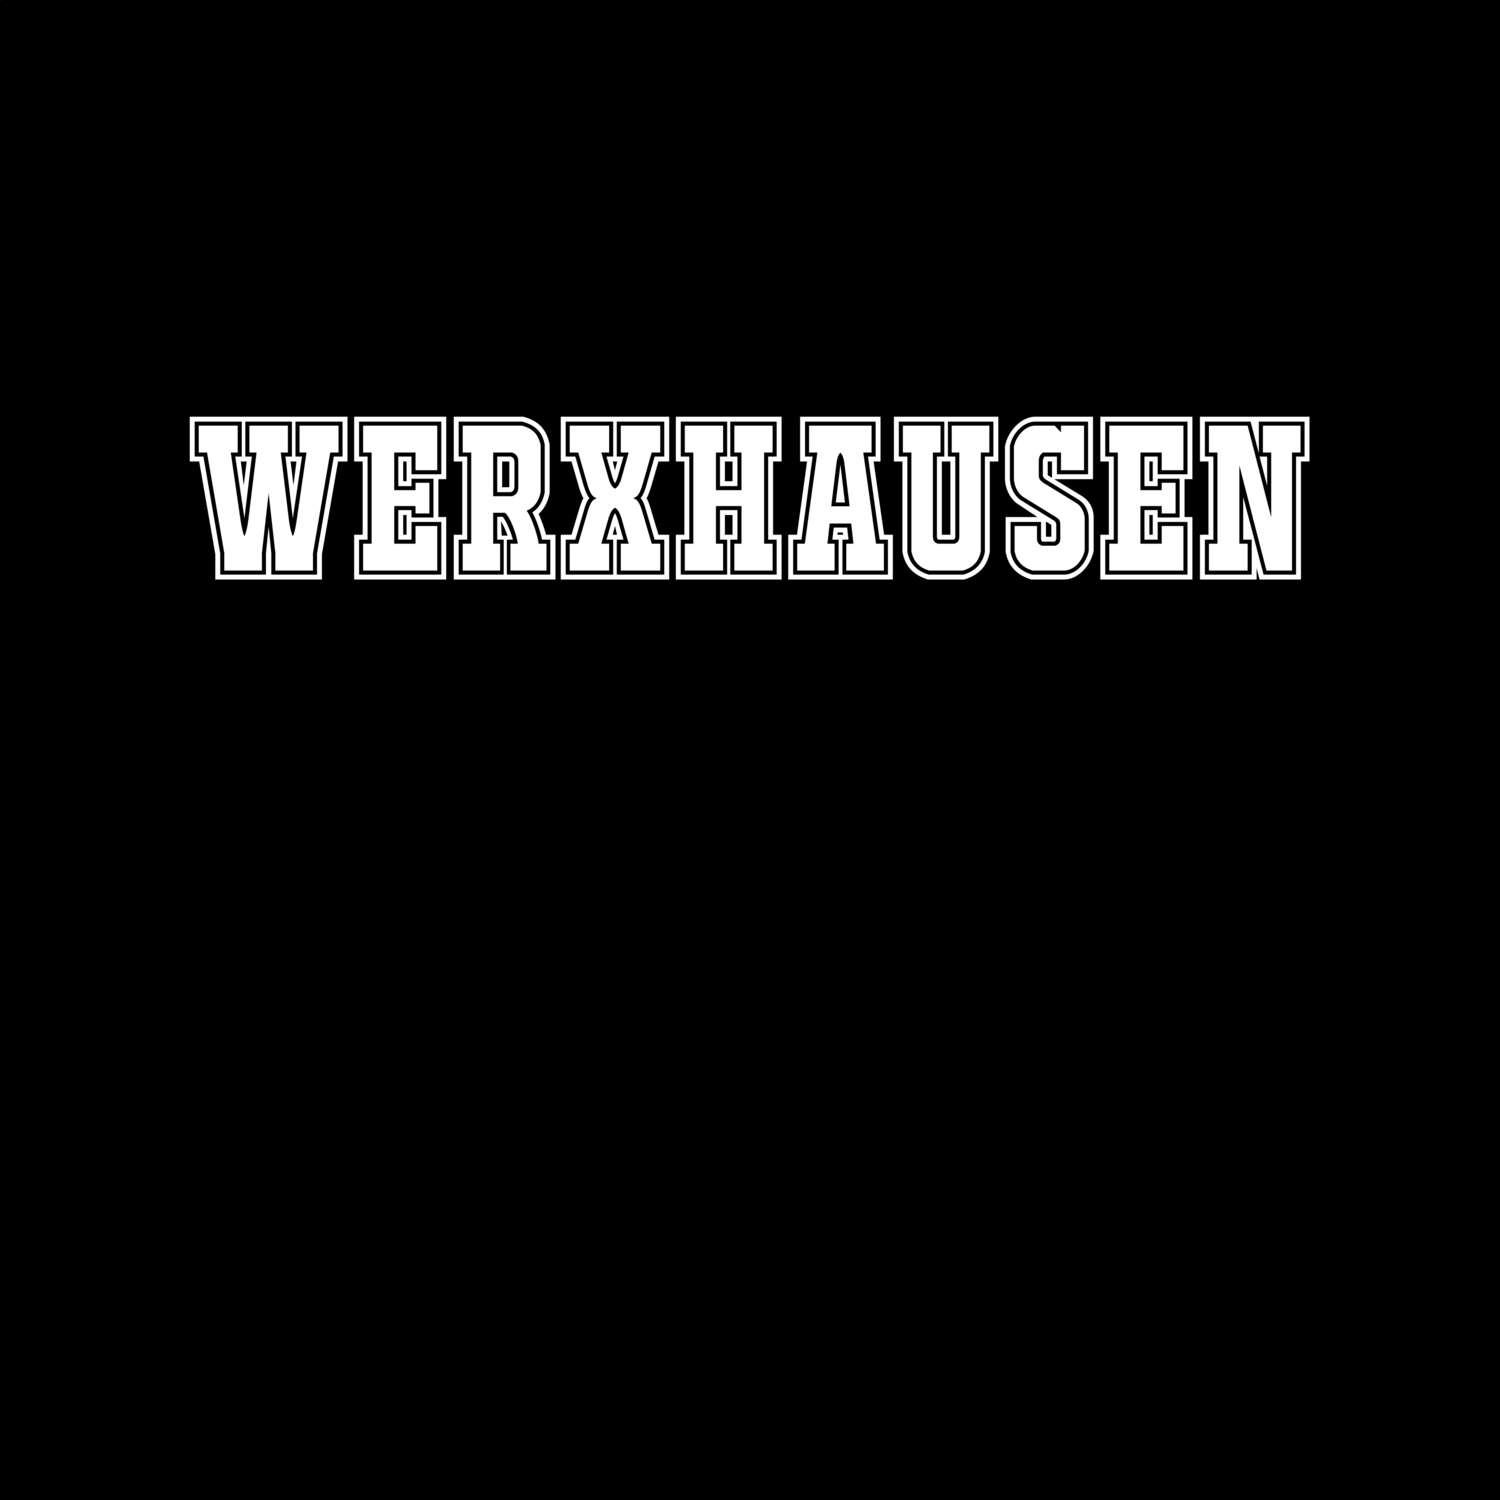 Werxhausen T-Shirt »Classic«